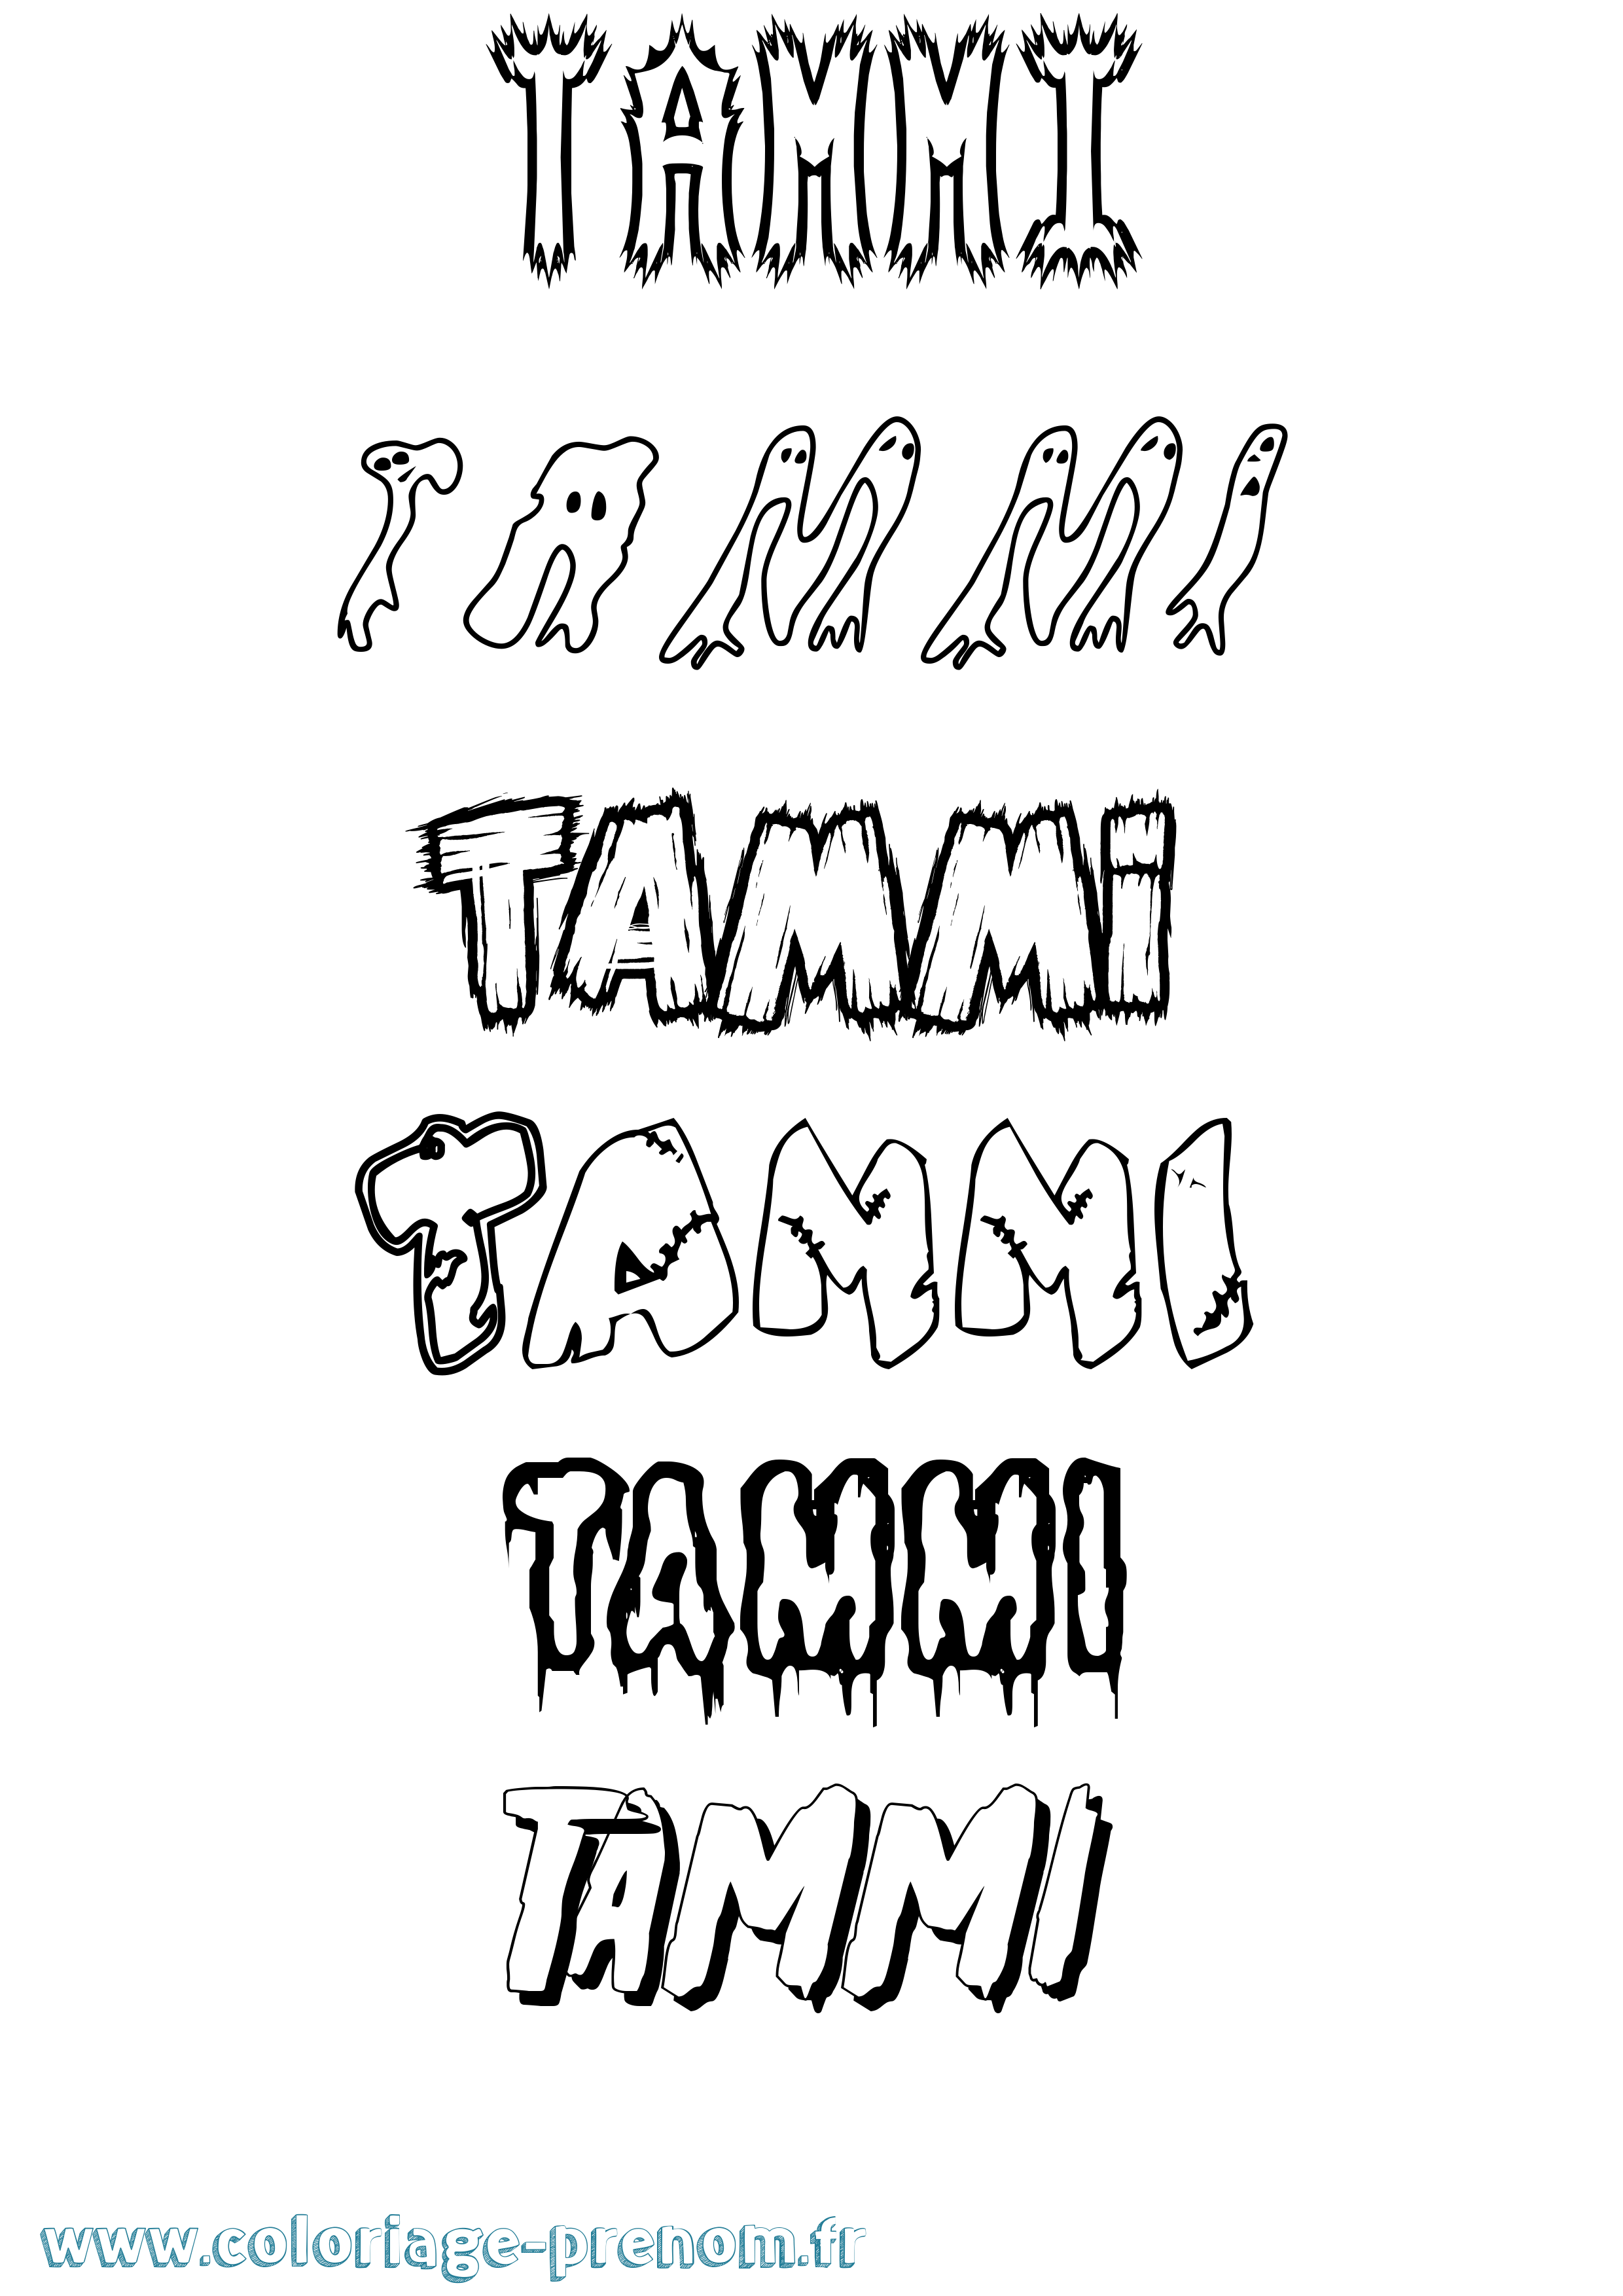 Coloriage prénom Tammi Frisson